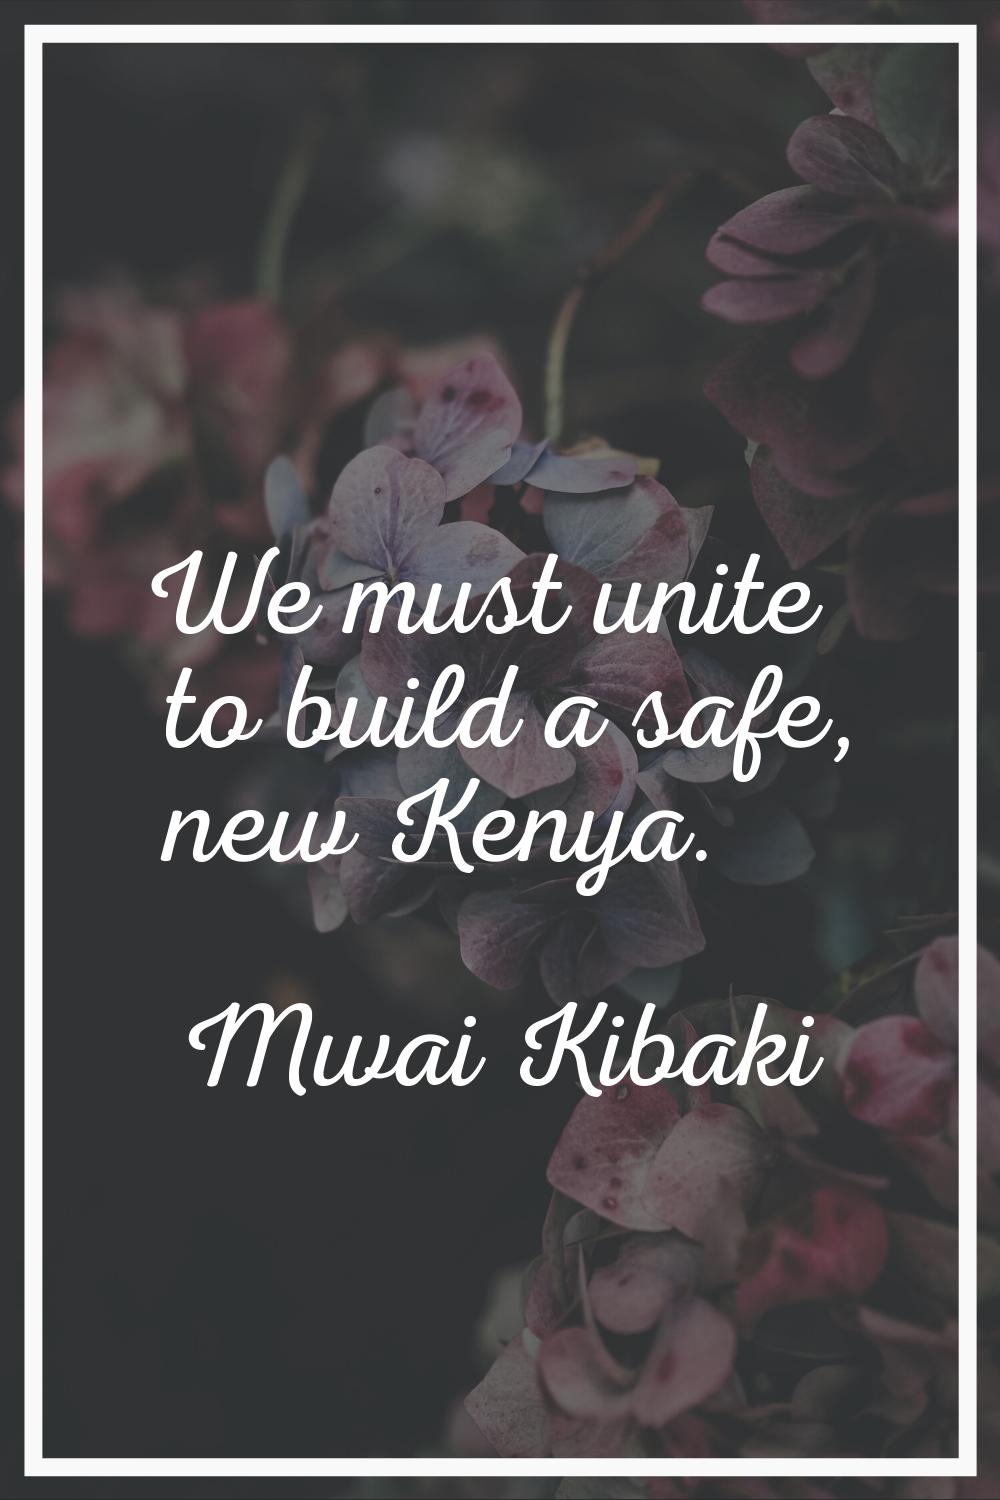 We must unite to build a safe, new Kenya.